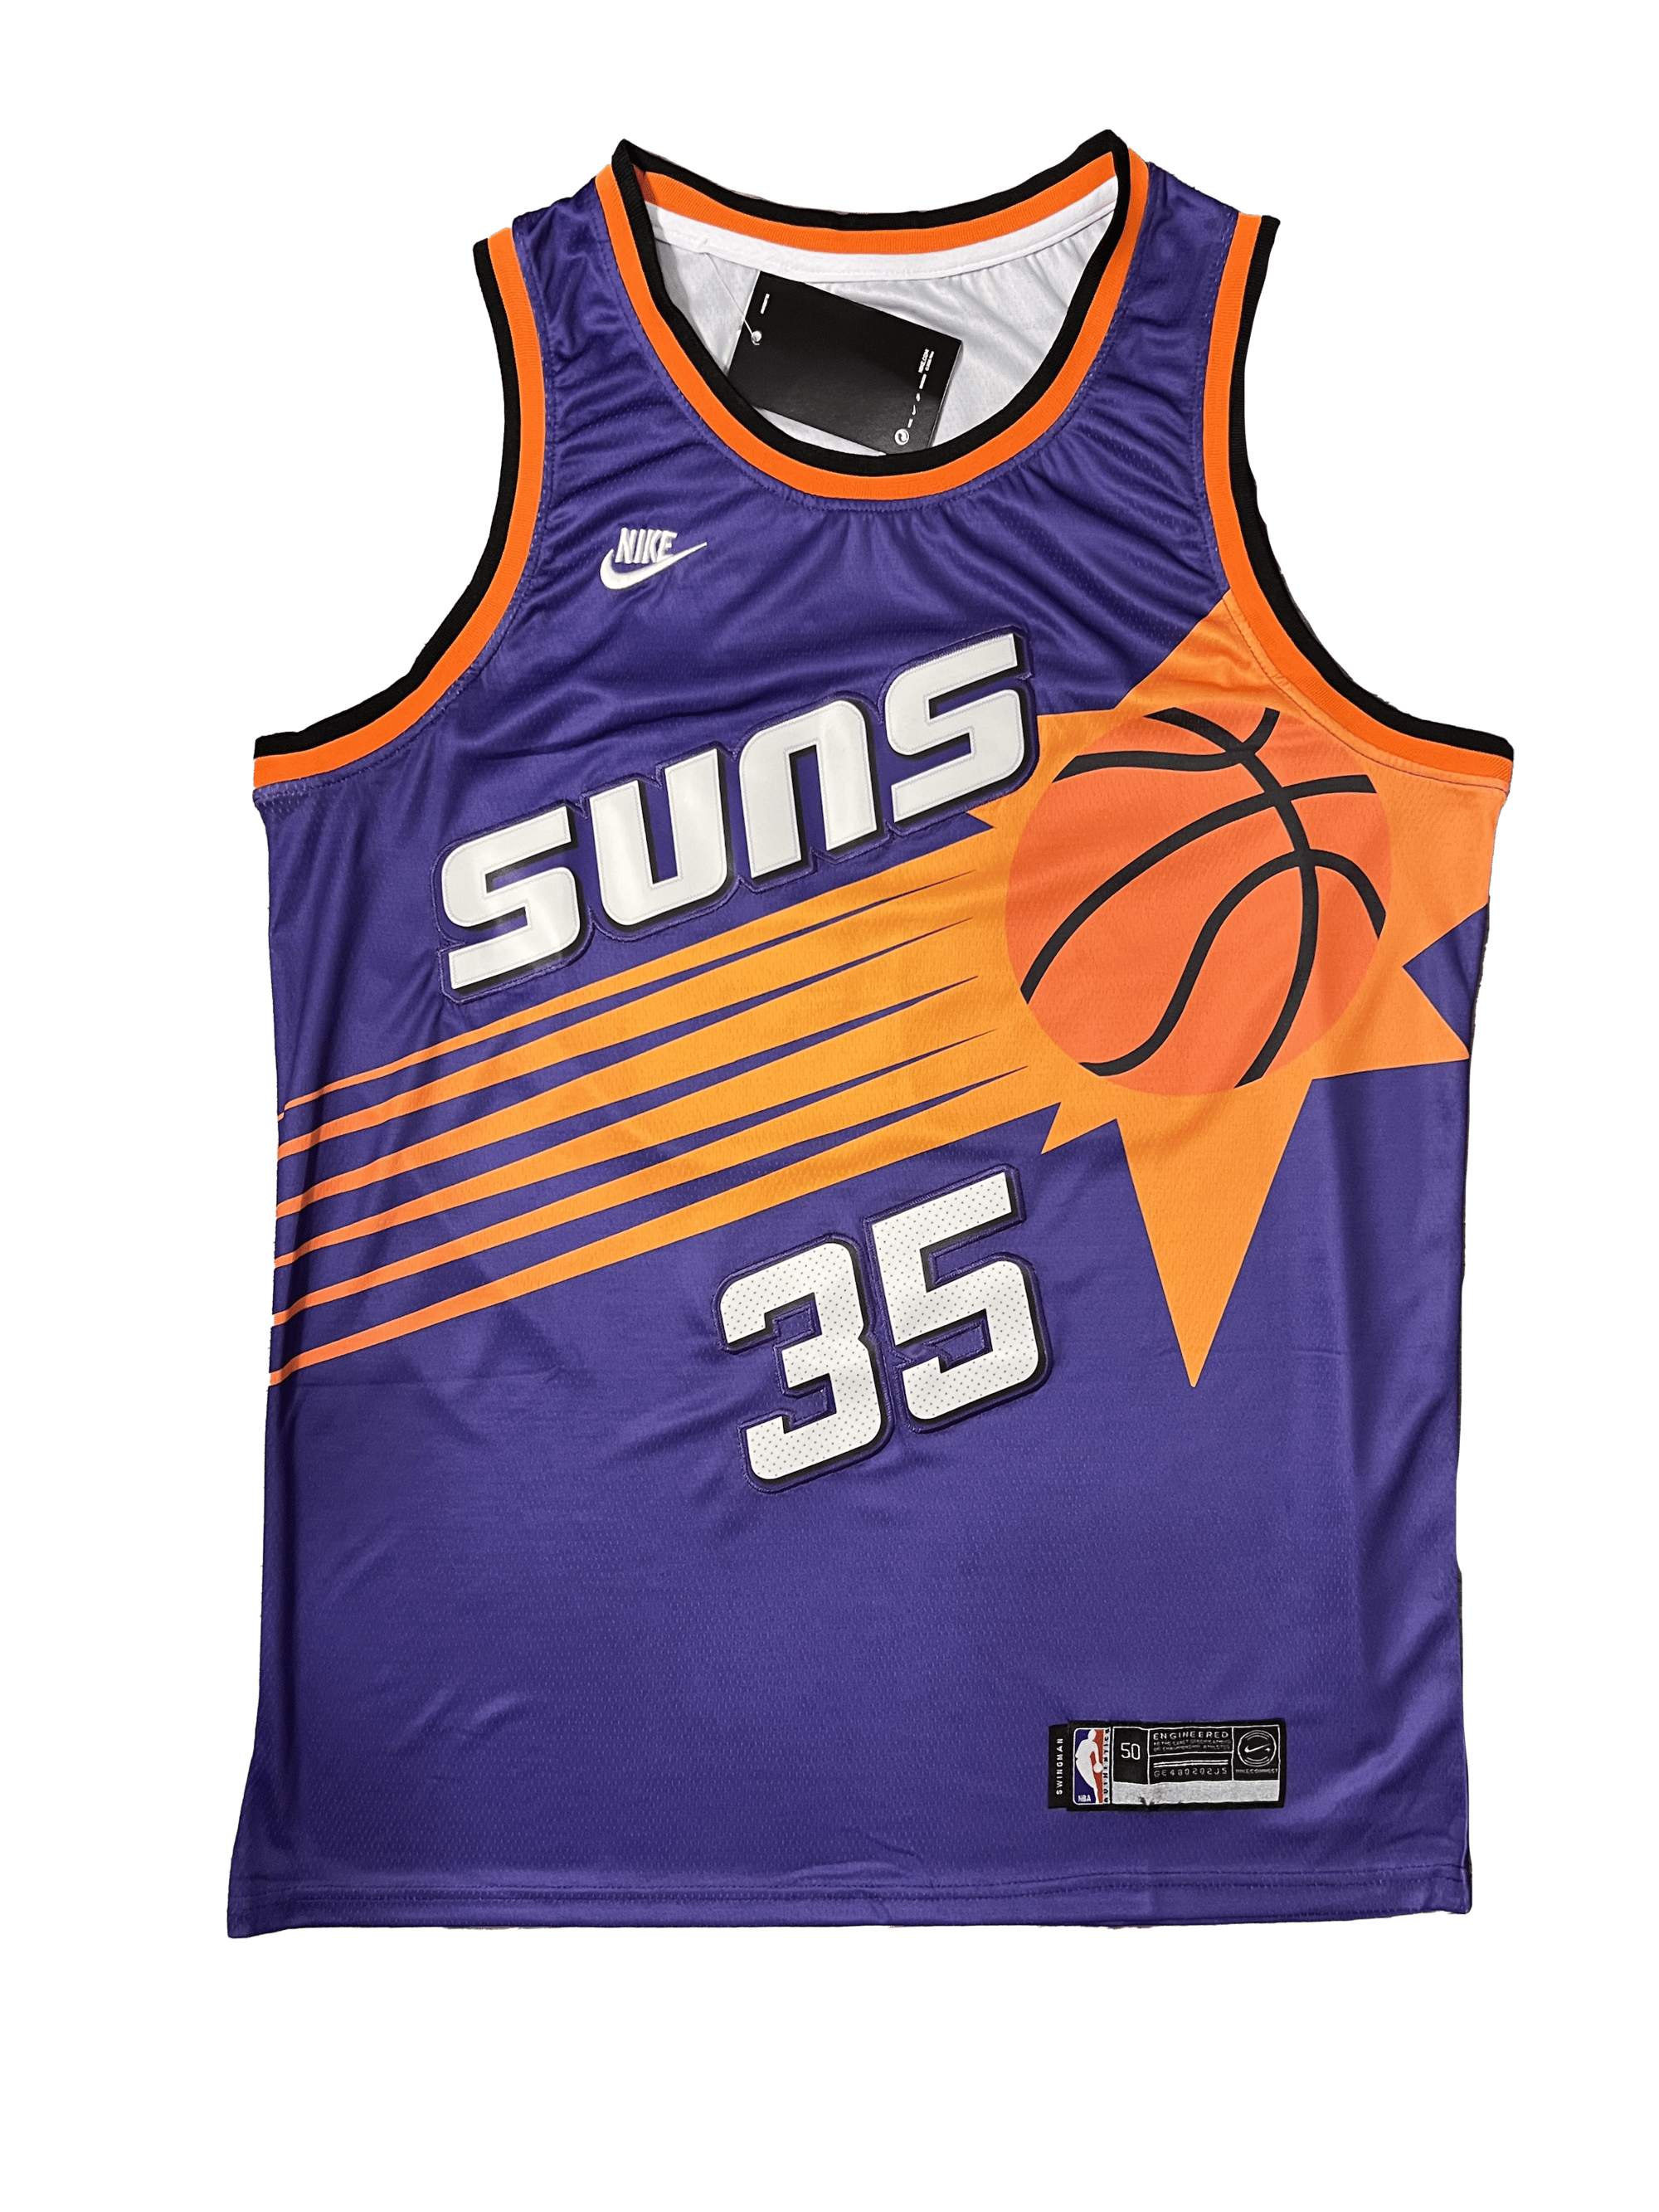 Kevin Durant Phoenix Suns Jerseys, Kevin Durant Suns Basketball Jerseys